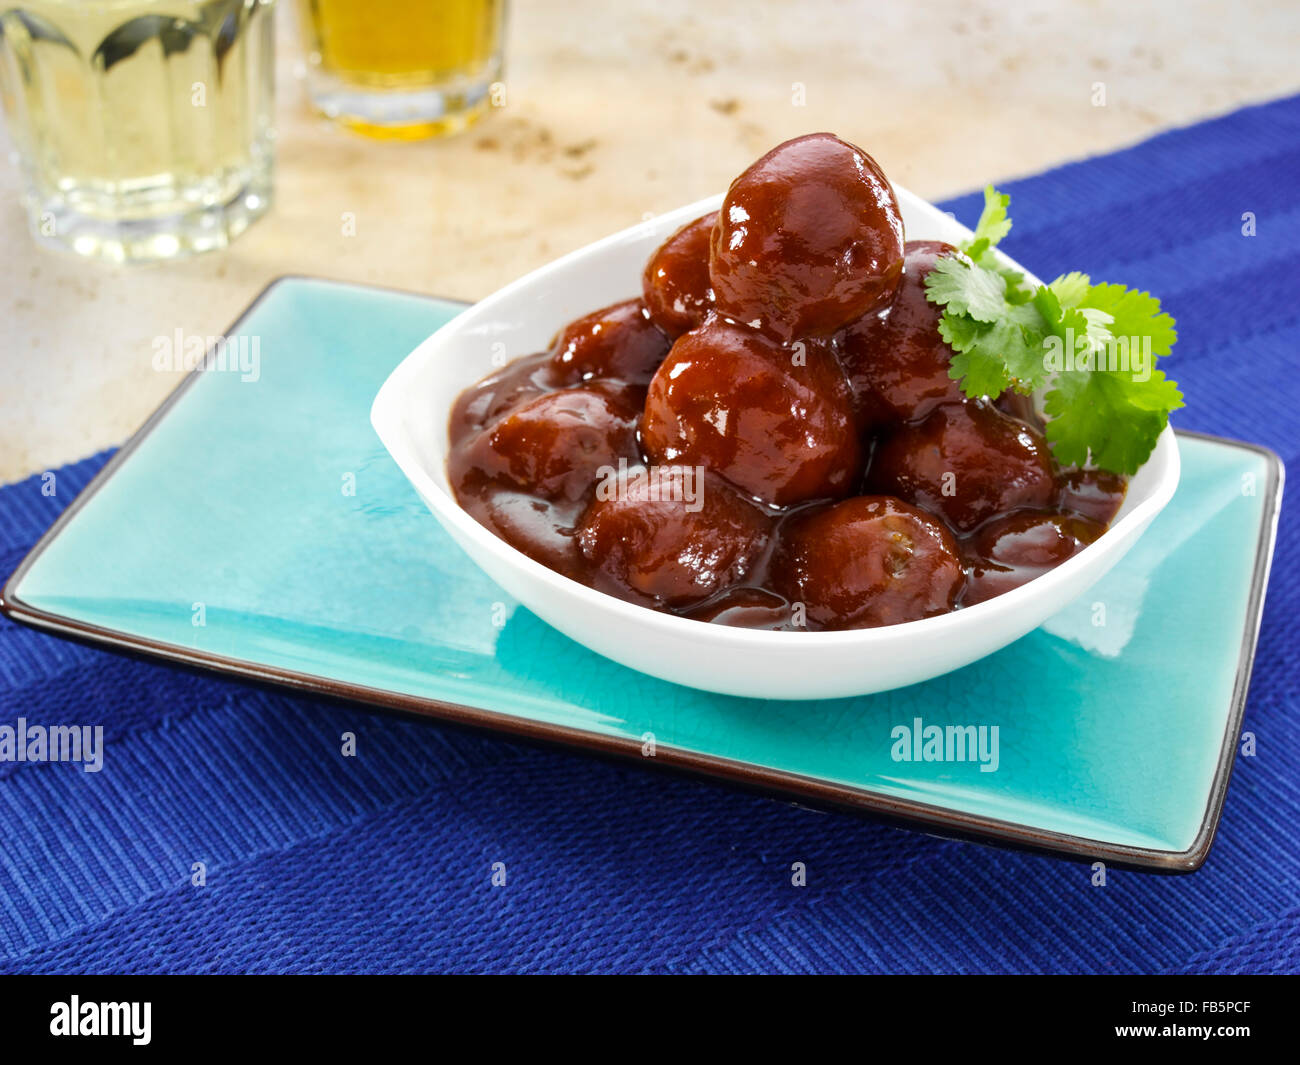 Chipotle BBQ sauce on meatballs Stock Photo